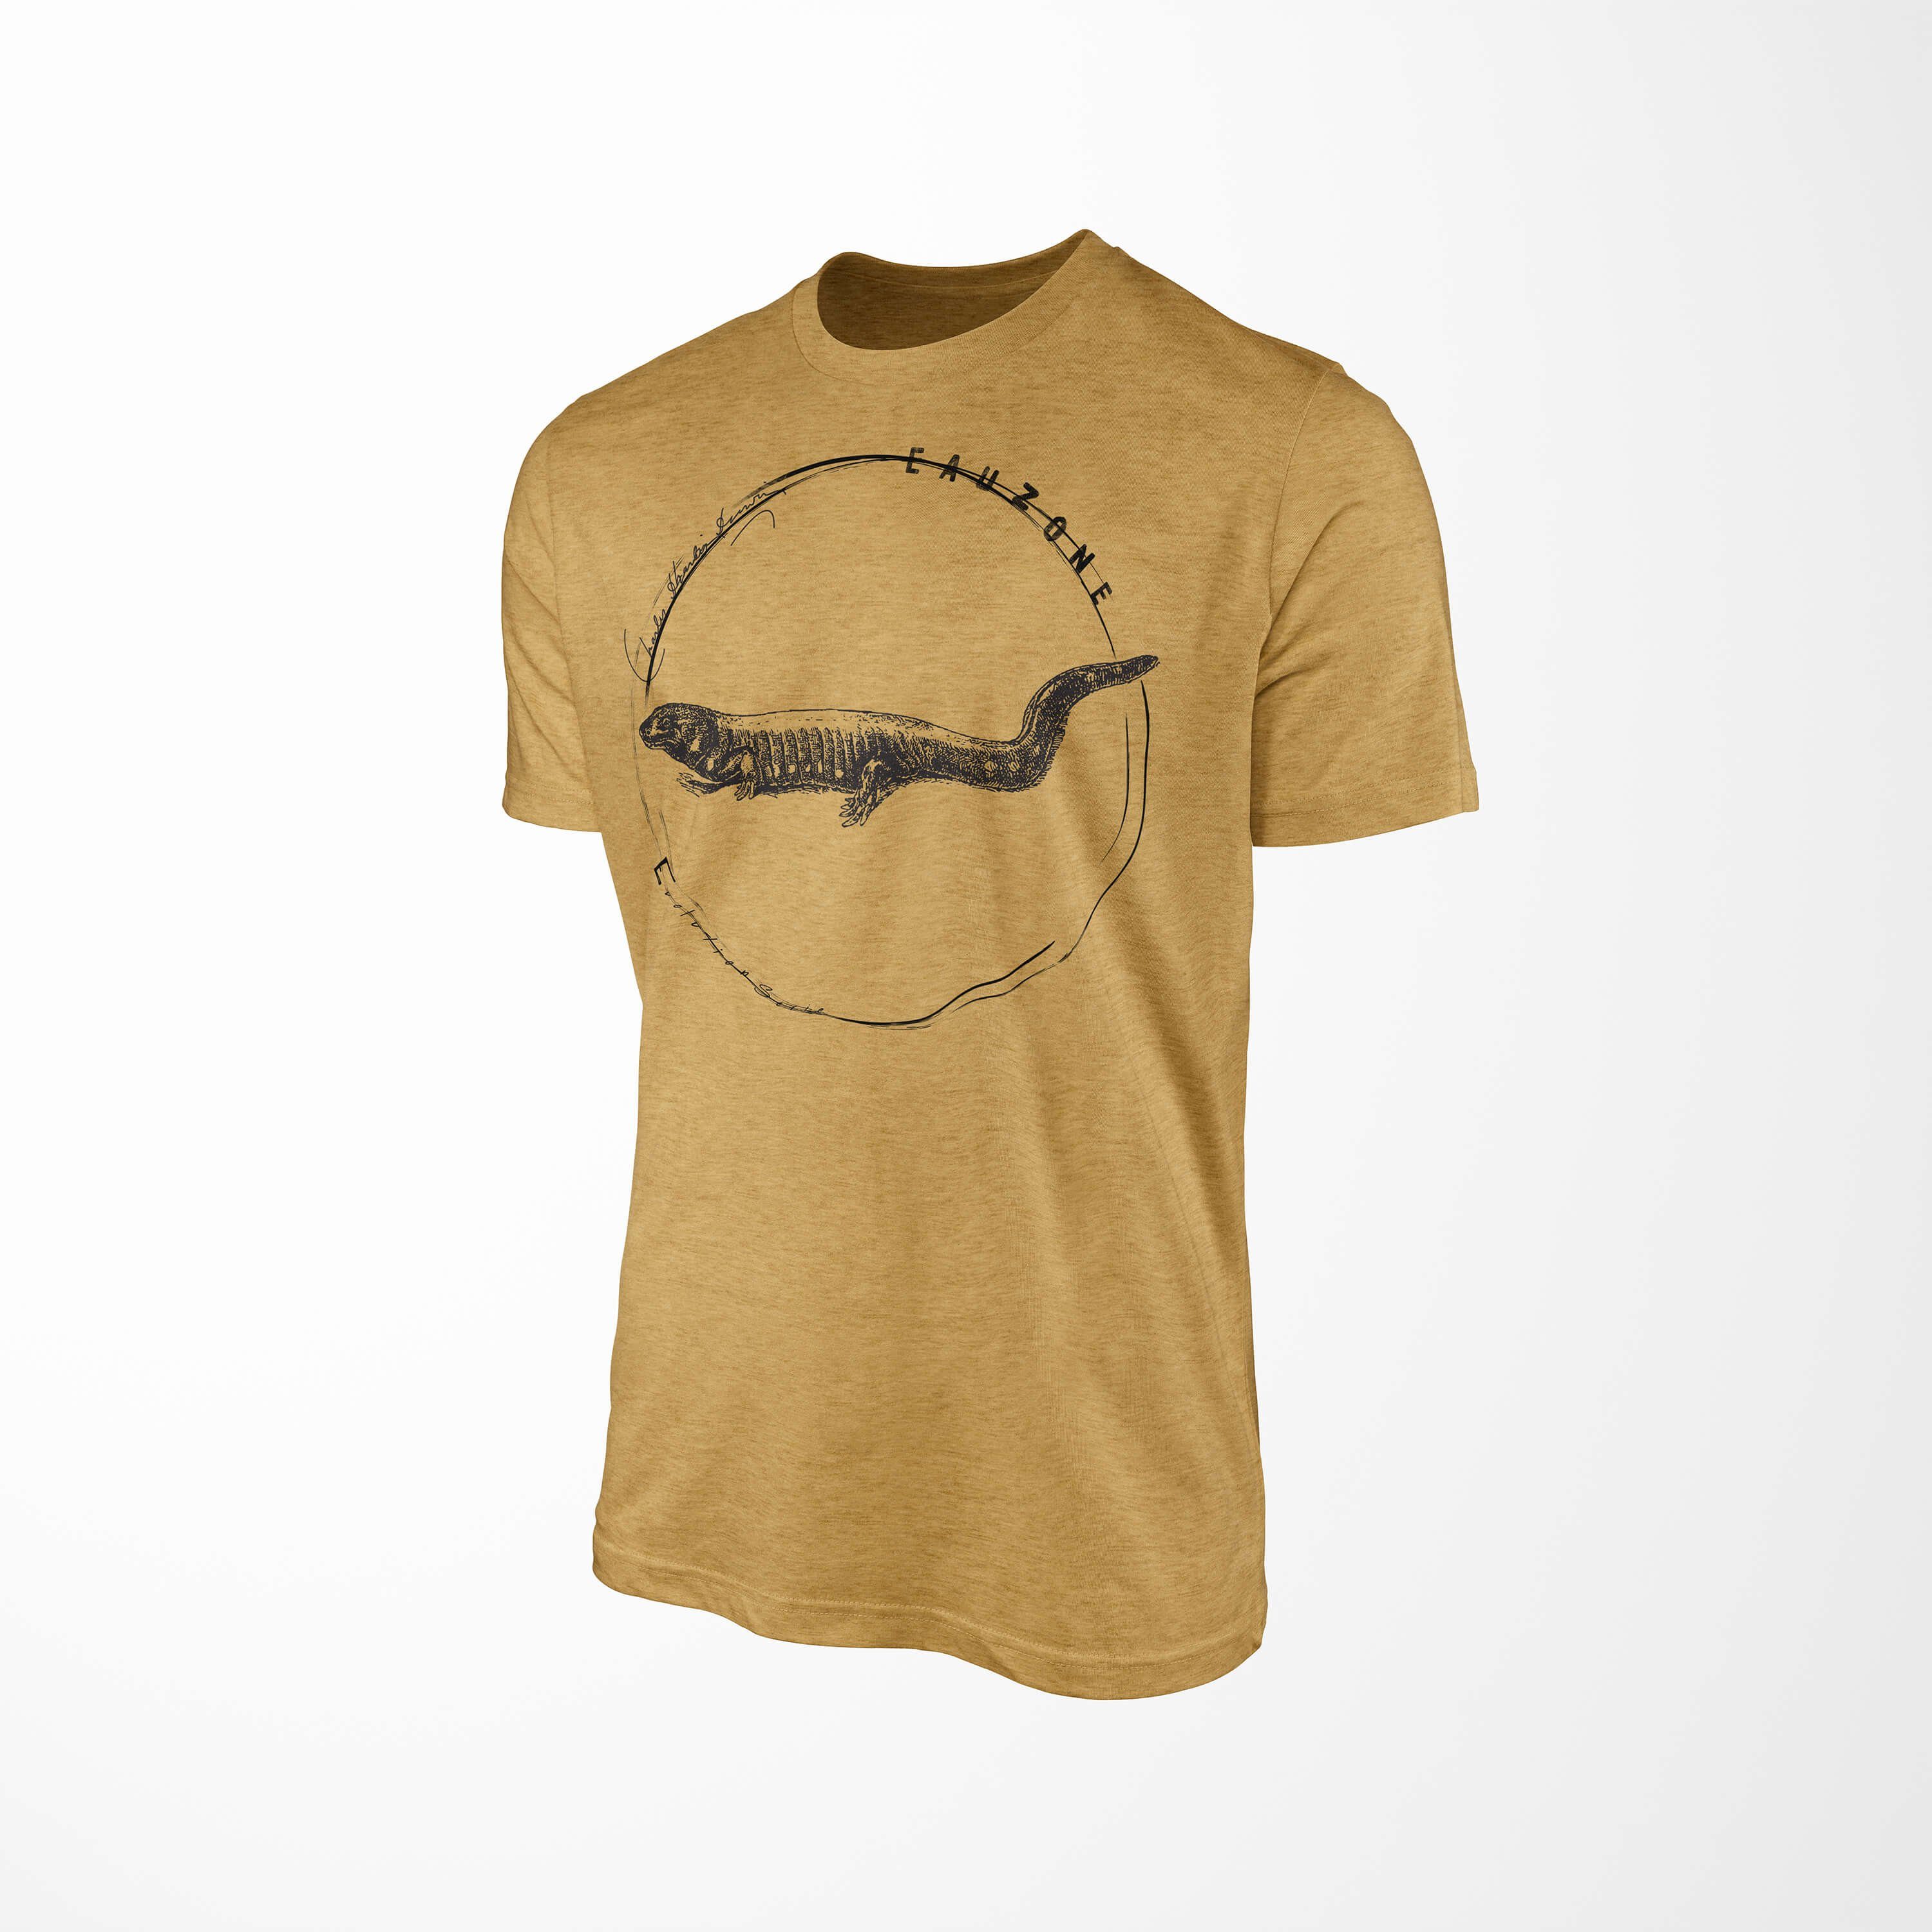 T-Shirt Amblystoma T-Shirt Antique Gold Art Evolution Sinus Herren